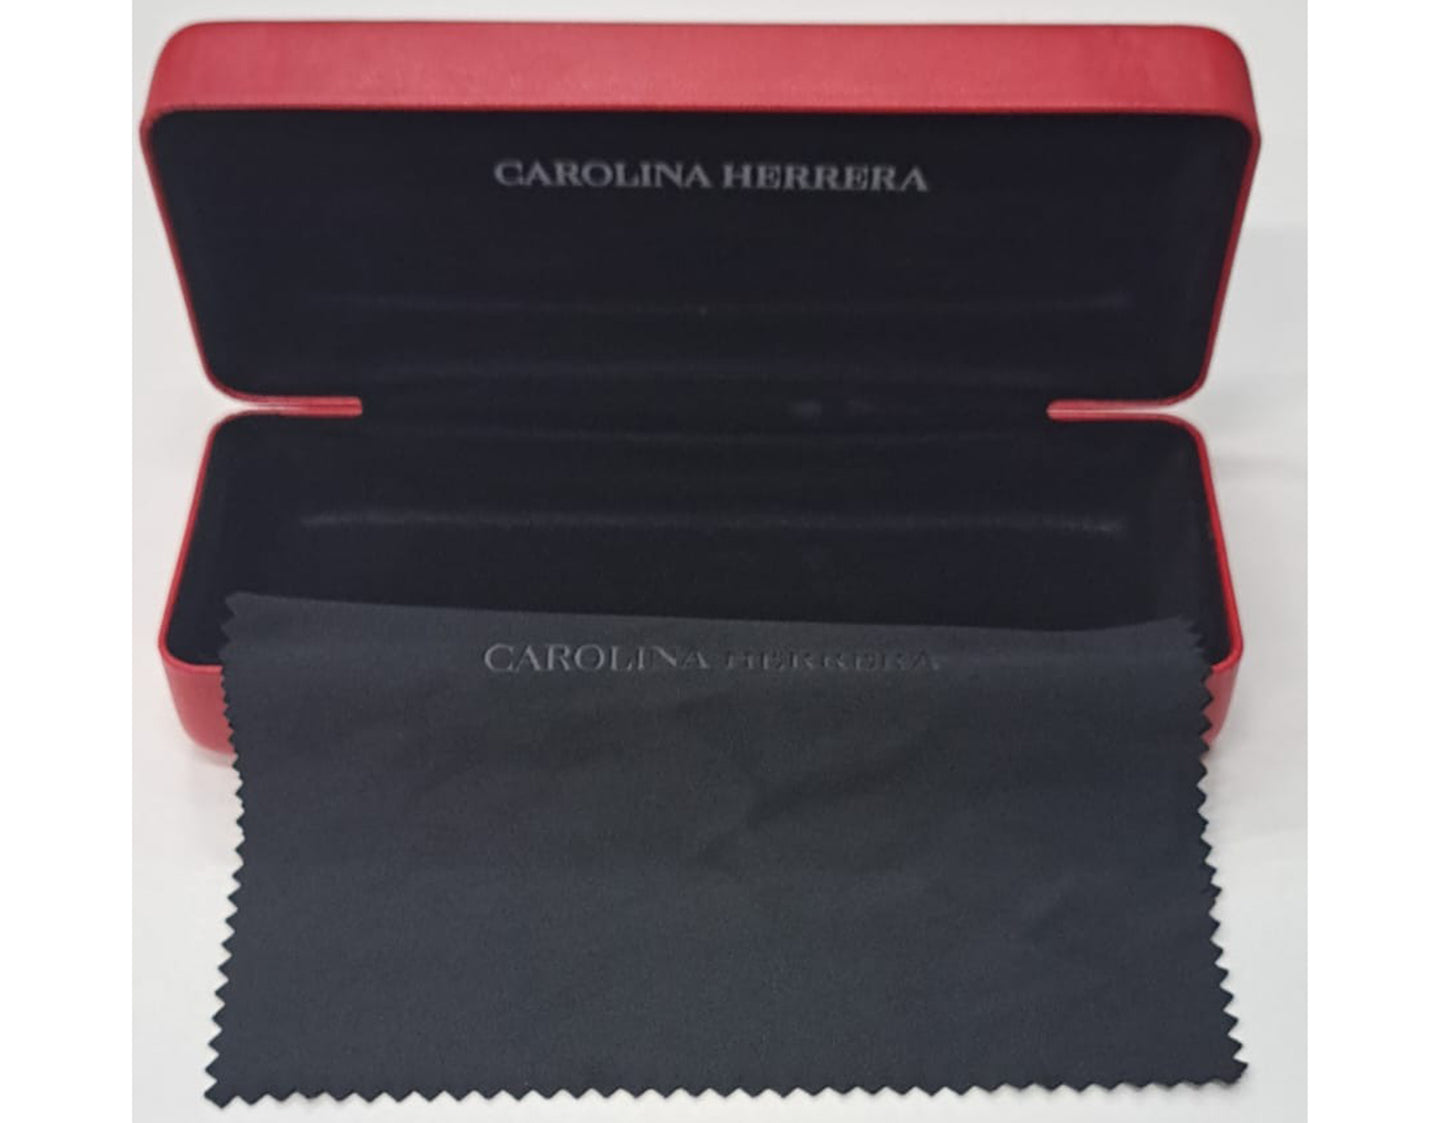 Carolina Herrera VHE834-0700-54 54mm New Eyeglasses